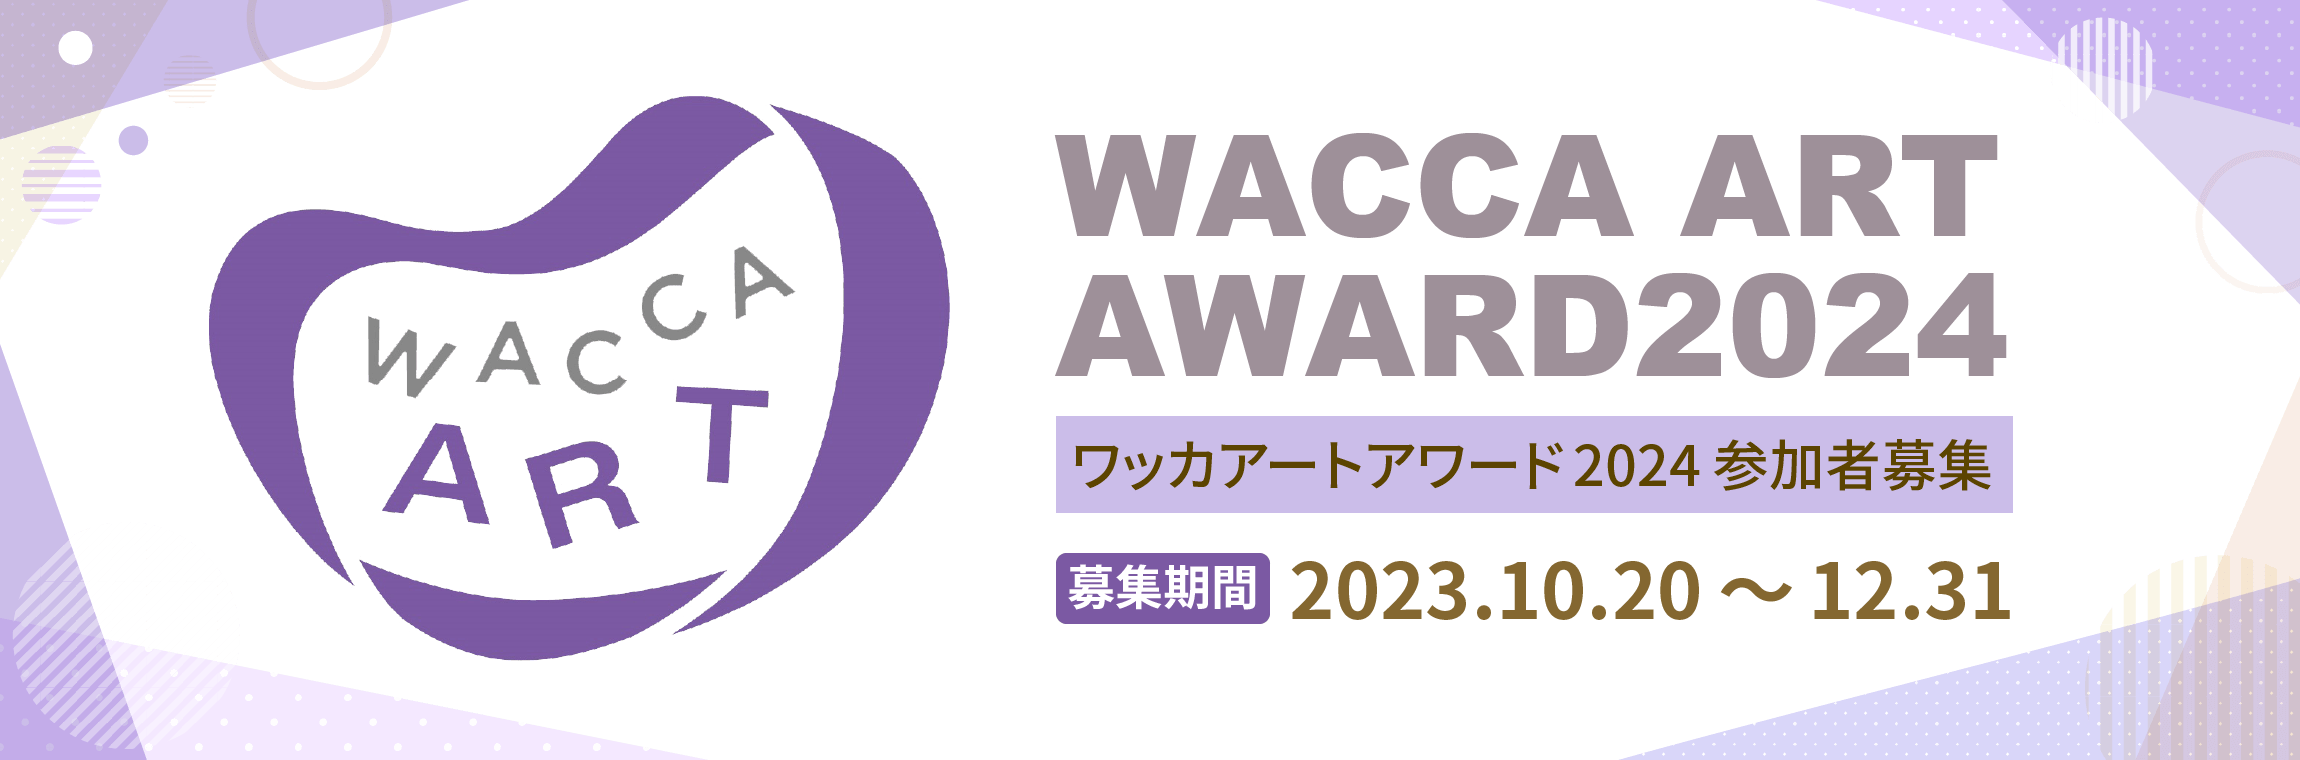 WACCA ART AWARD ワッカアートアワード2024